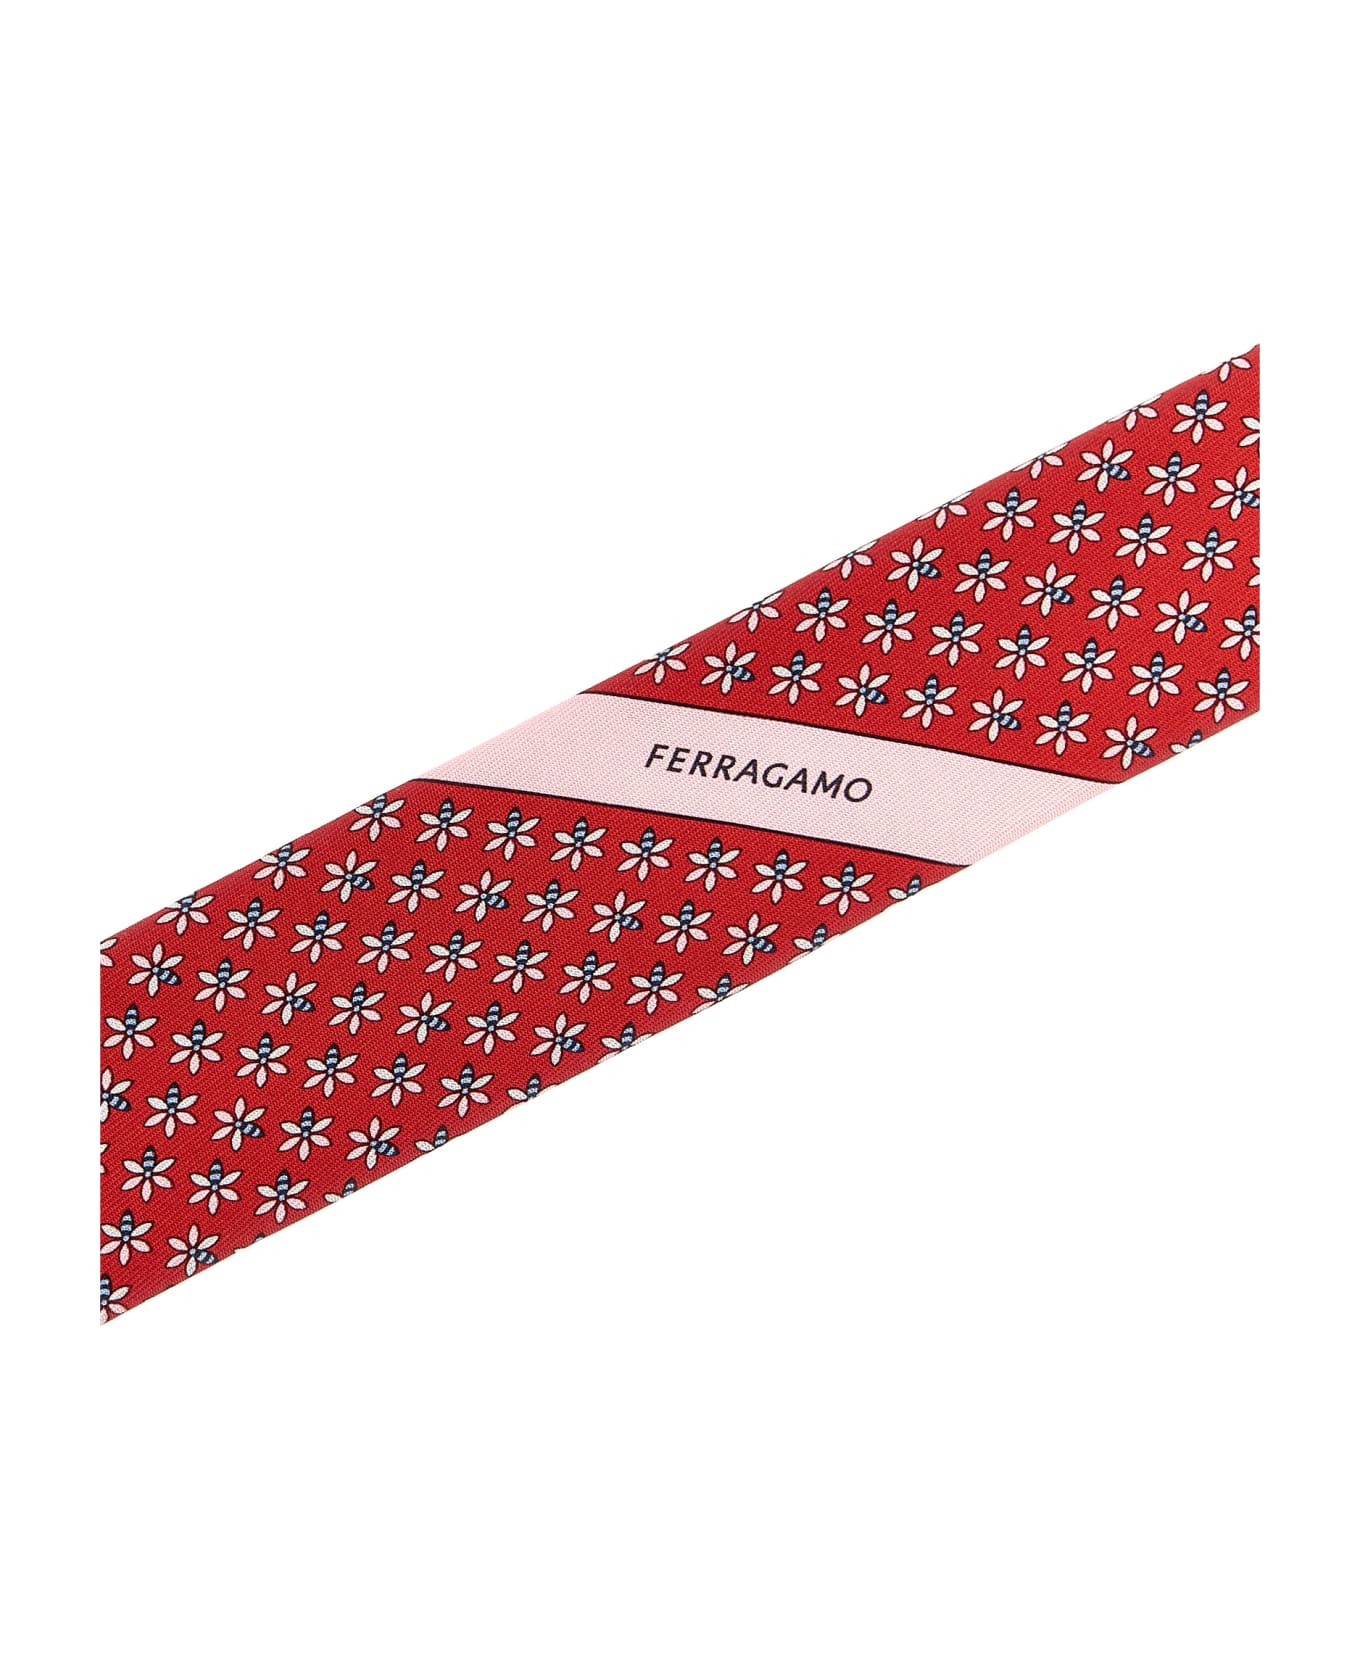 Ferragamo 'api' Tie - Red ネクタイ